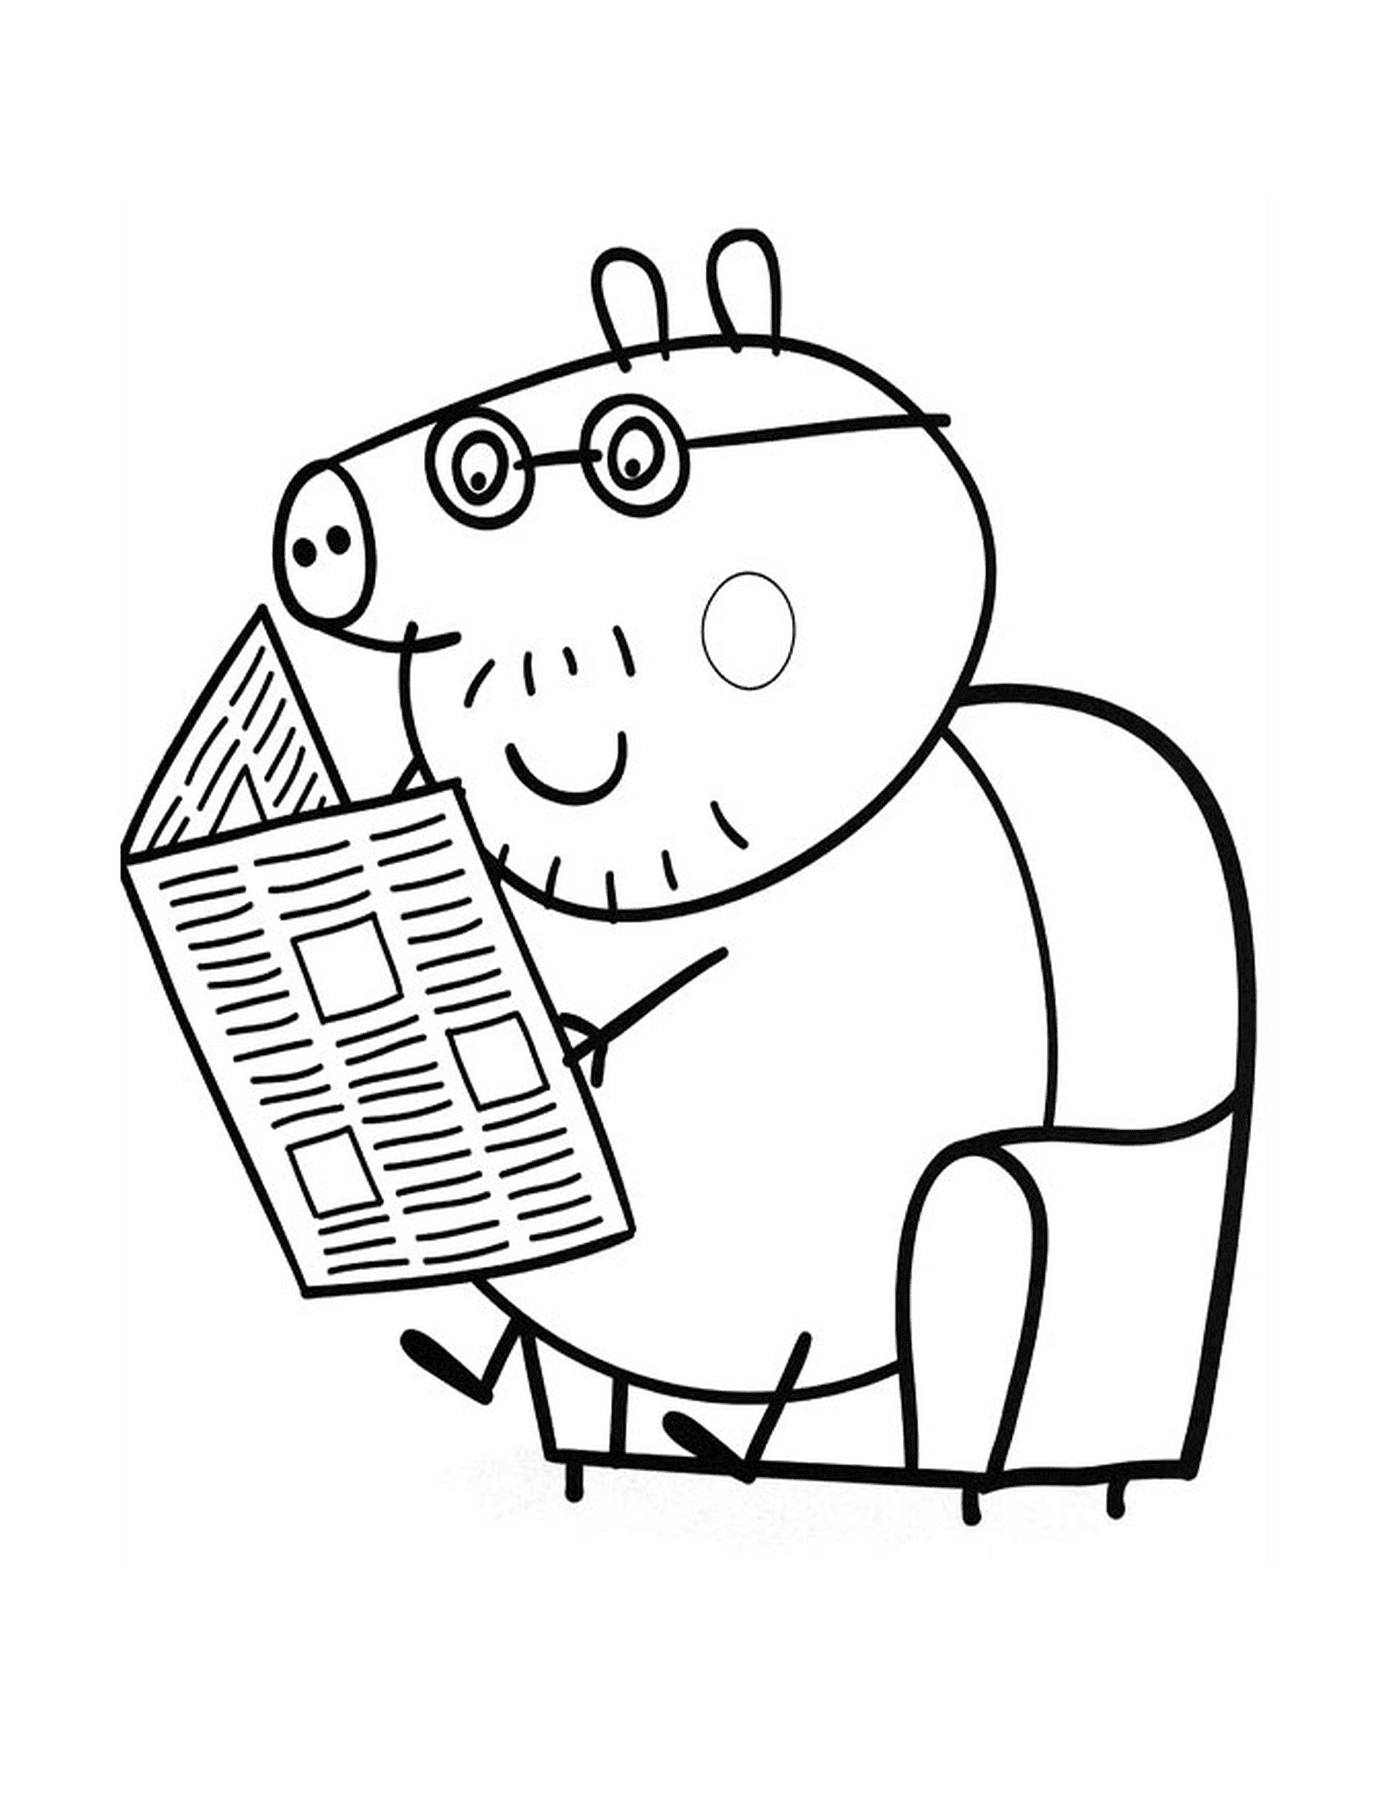  A pig reading a newspaper 